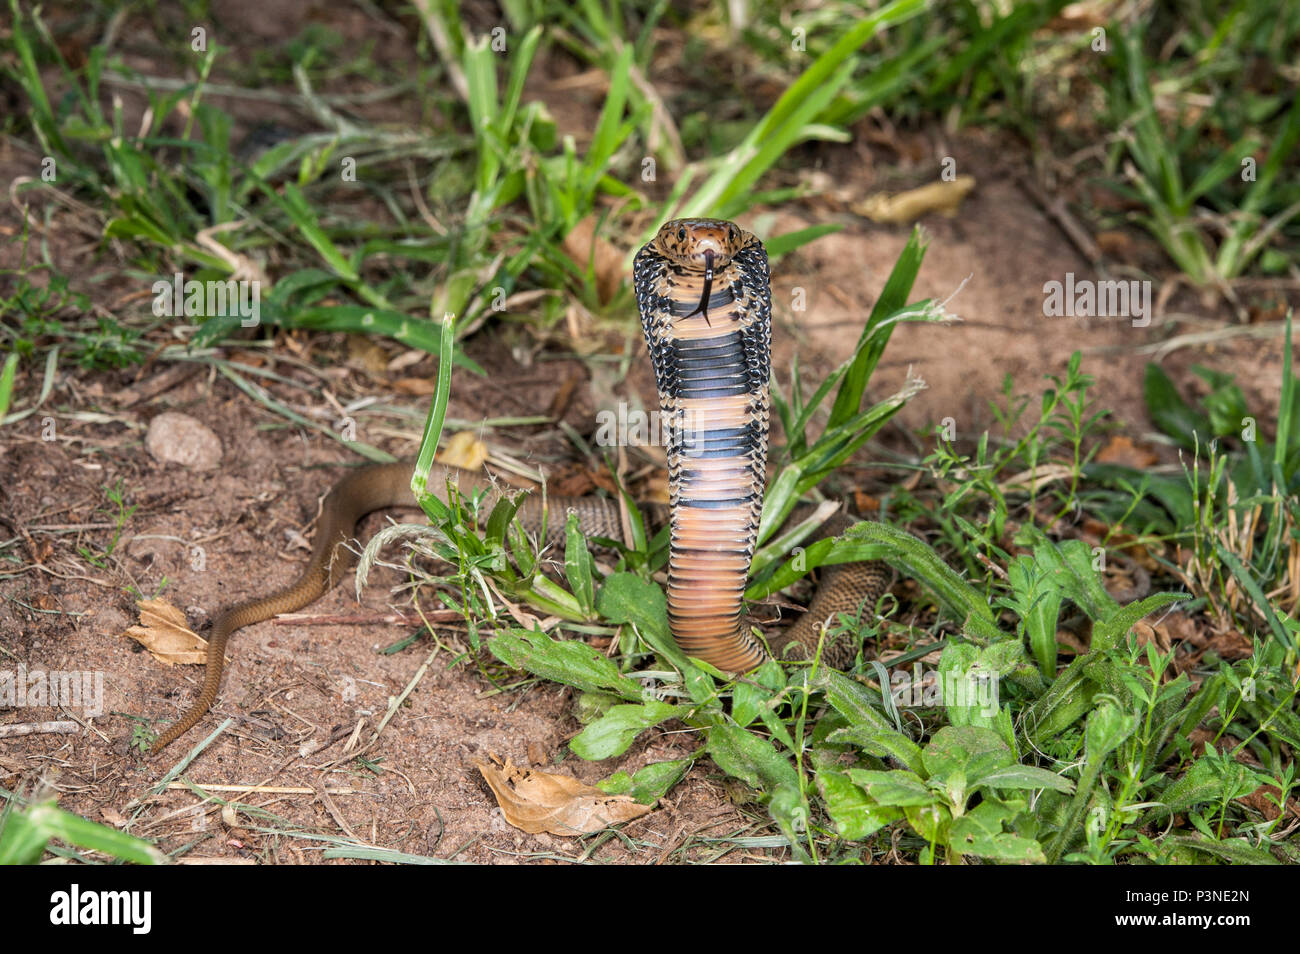 Mozambique escupir cobra (Naja mossambica) menores en postura defensiva, Parque Nacional Marakele, Limpopo, Sudáfrica Foto de stock